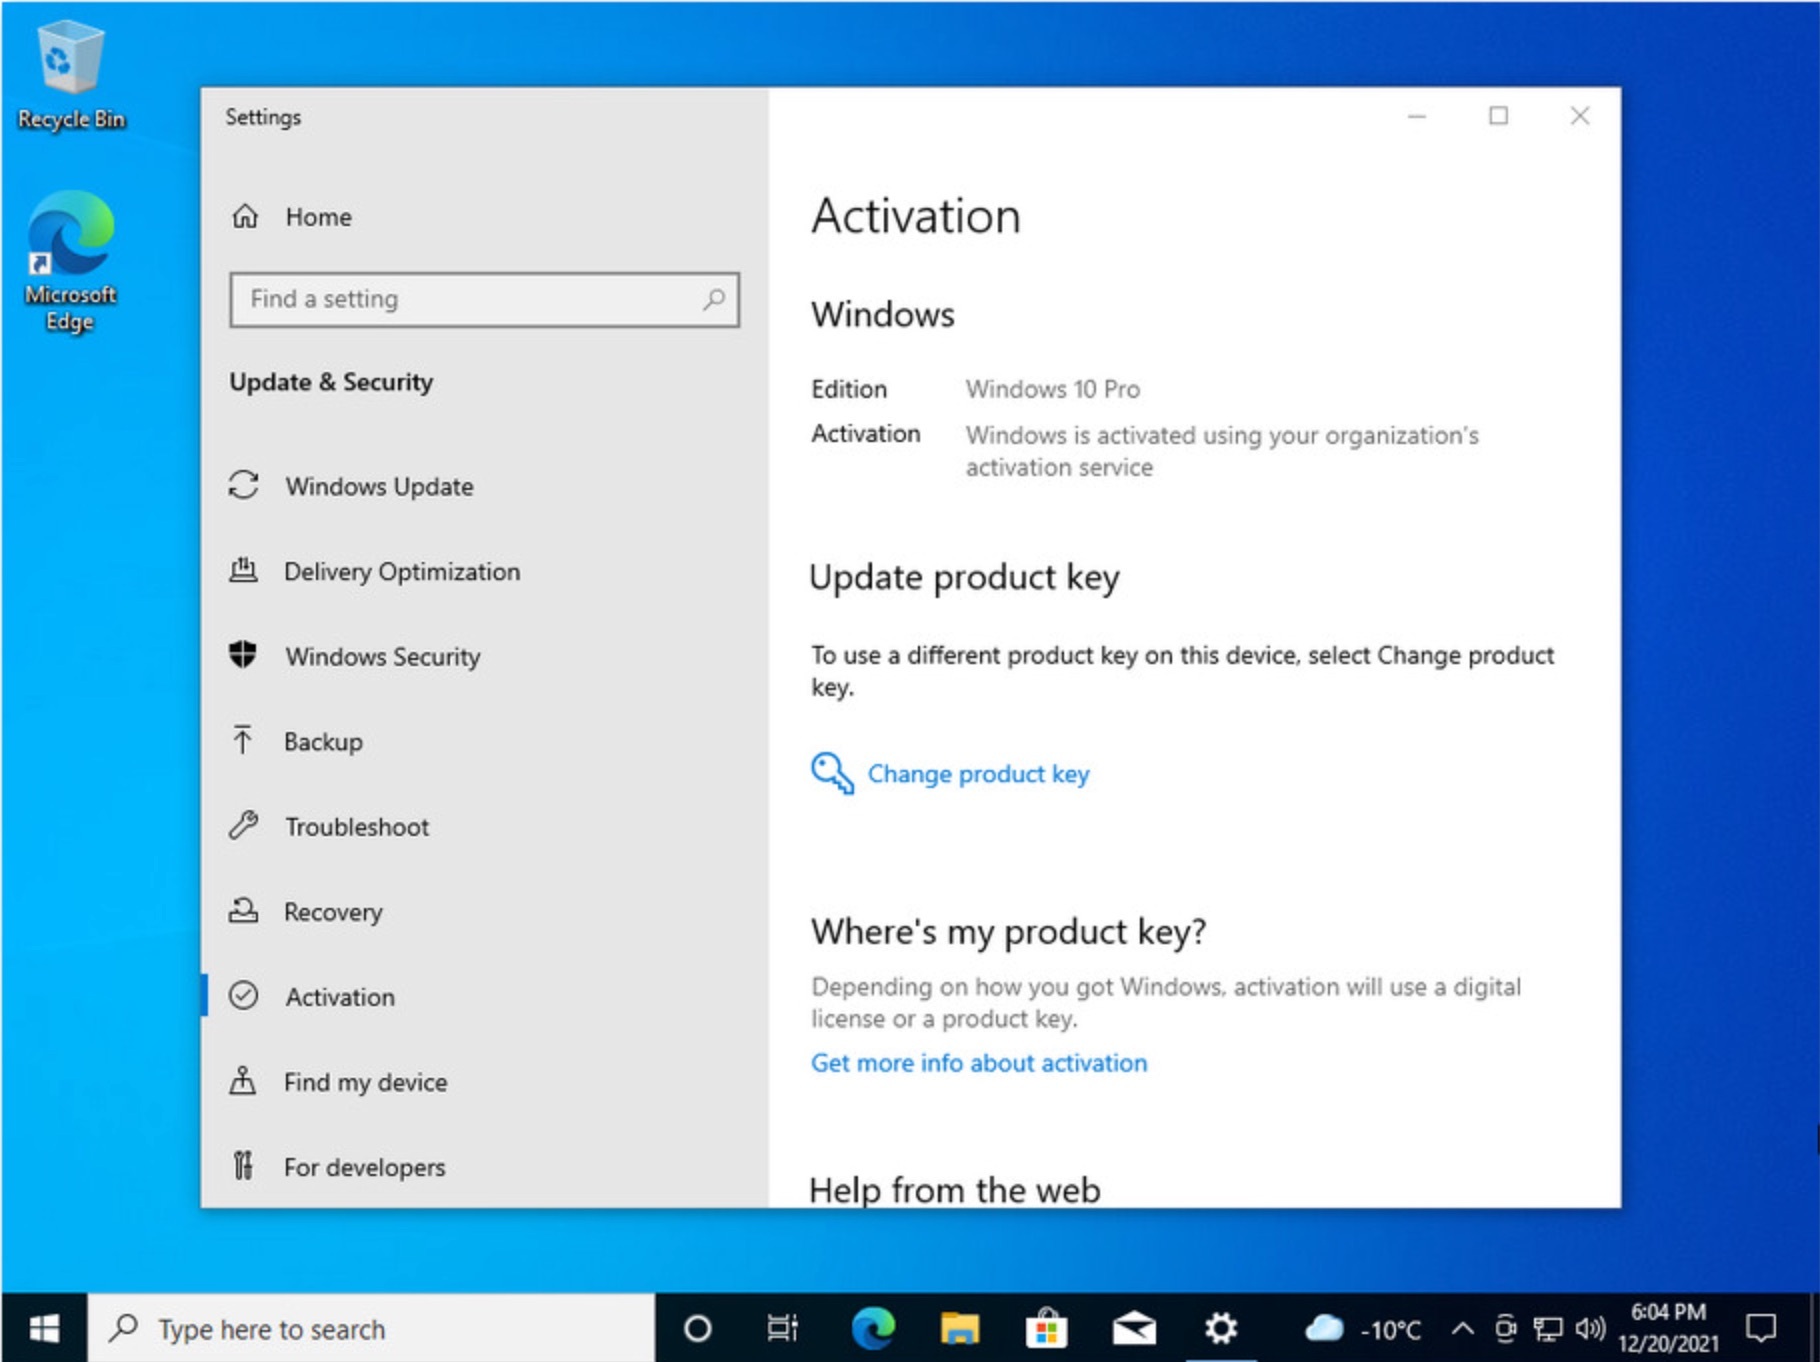 Windows 10 Final Build 10240 Start Notifications